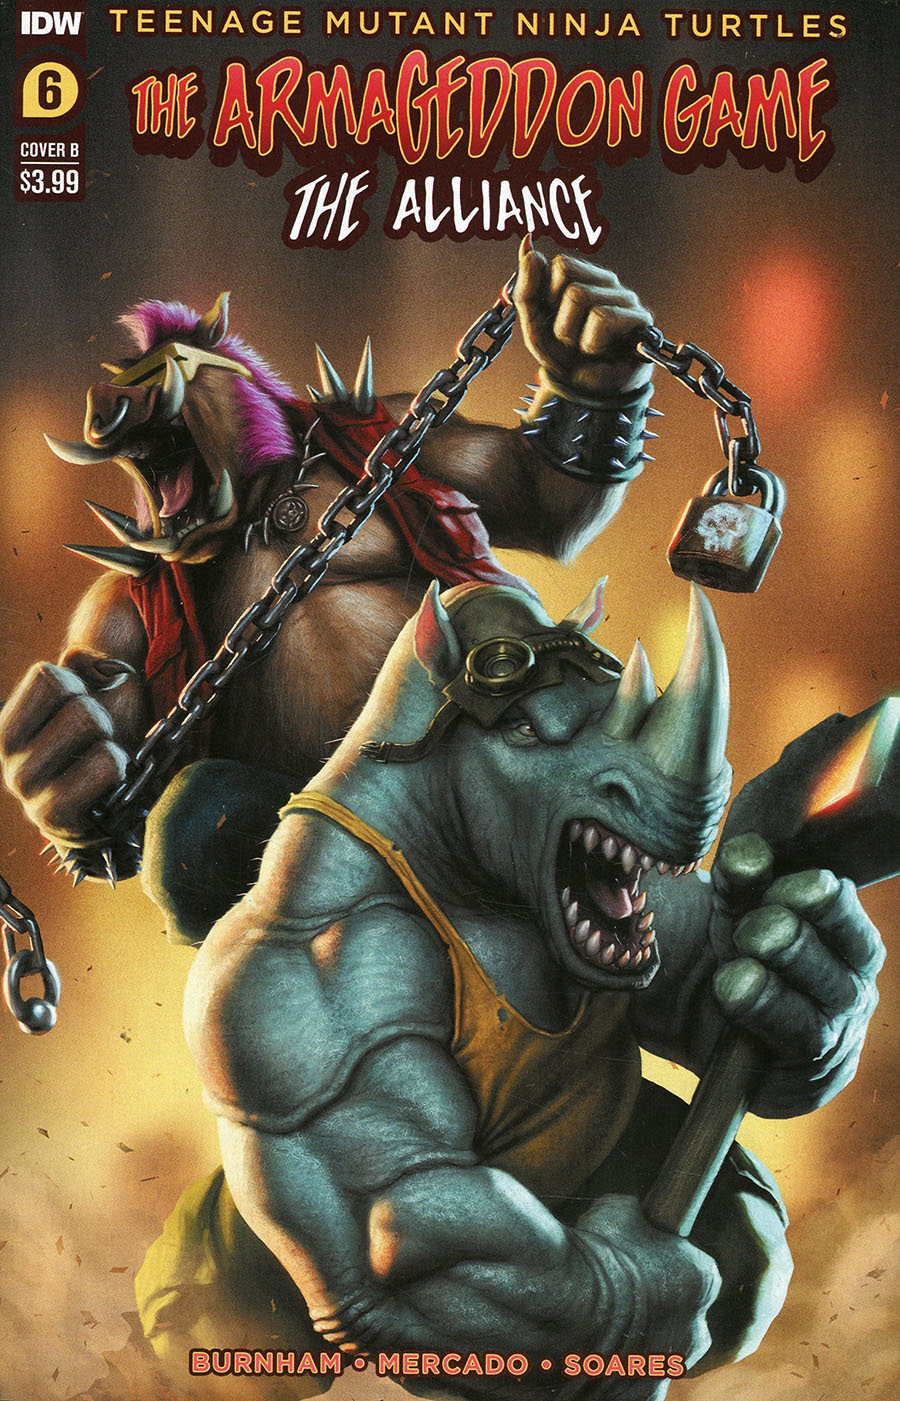 Teenage Mutant Ninja Turtles Armageddon Game The Alliance #6 Cover B Variant William Soares Cover